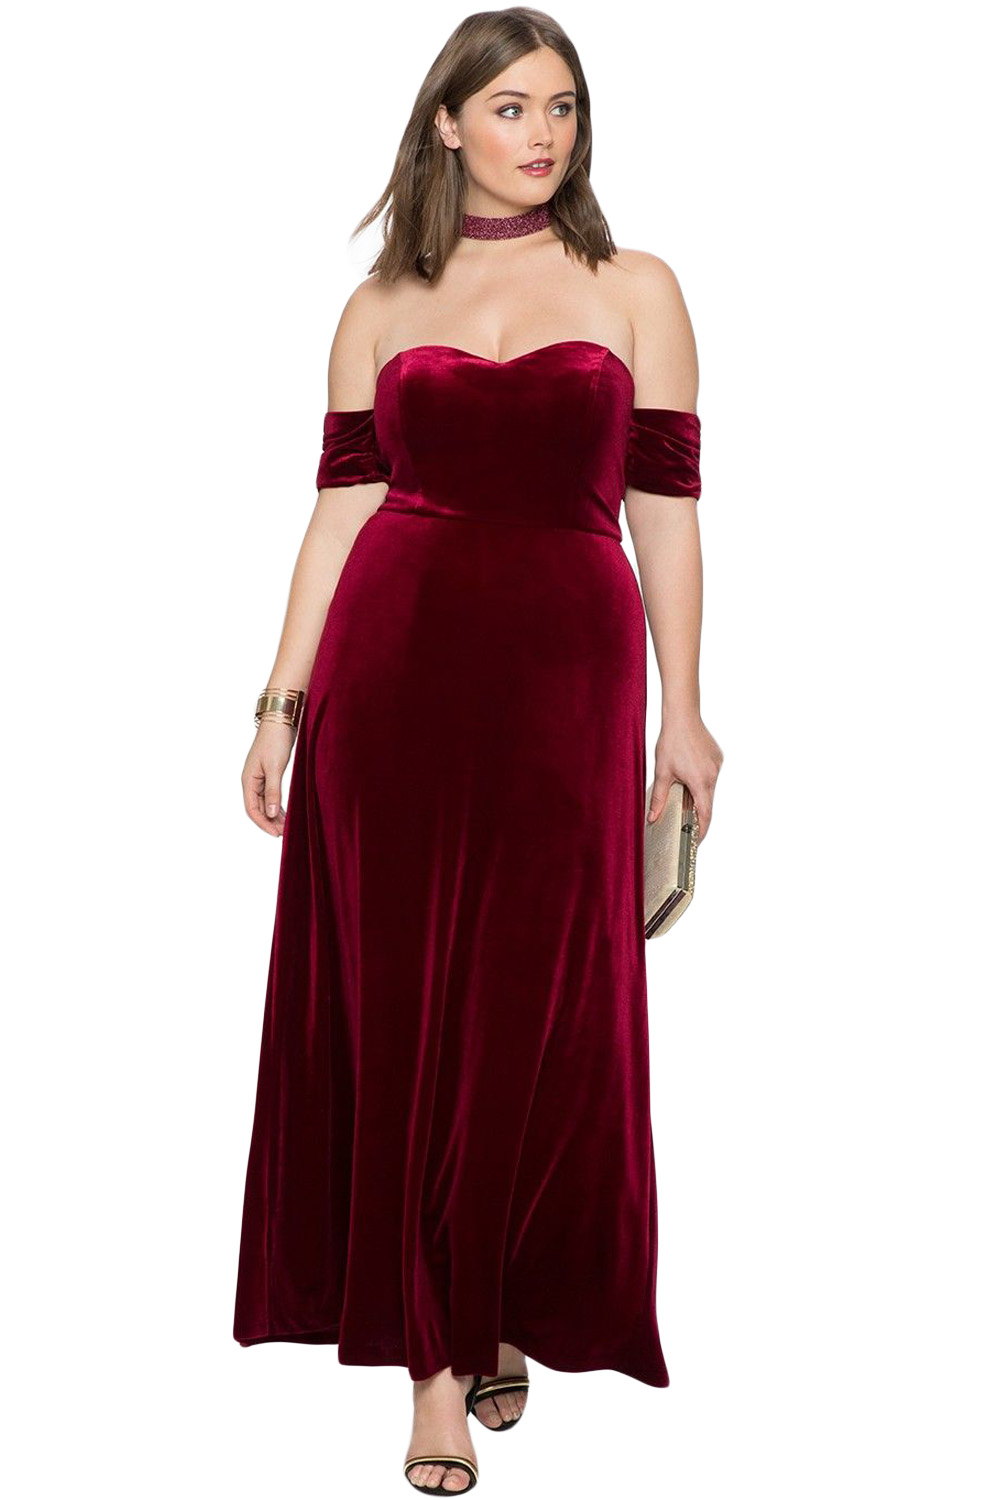 burgundy velvet off the shoulder dress